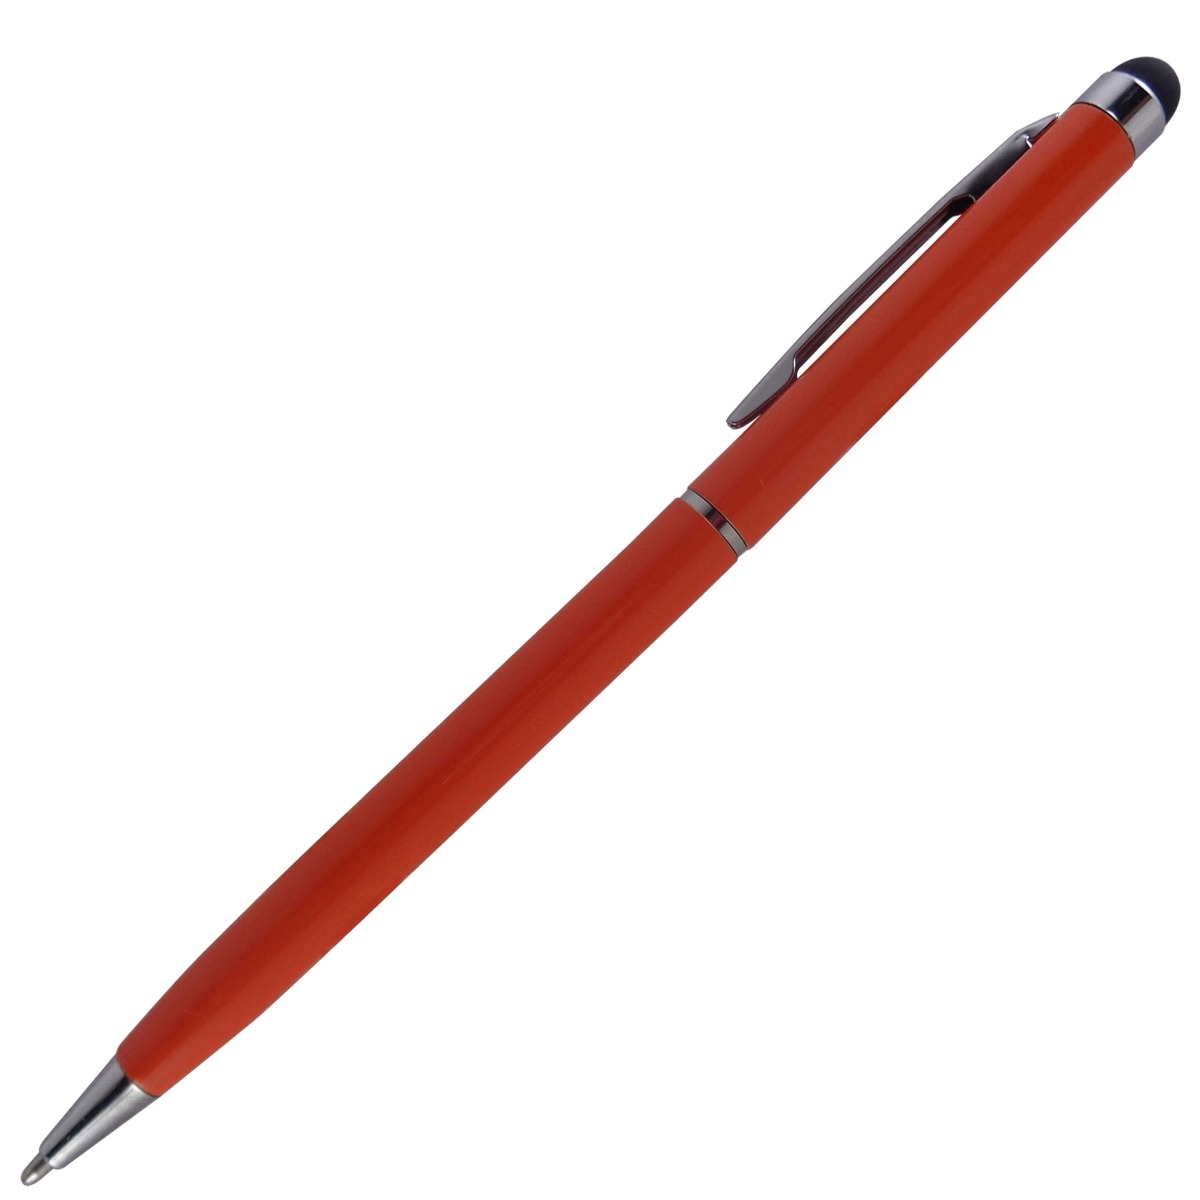 penhouse 13785 slim orange color body with silver clip medium Tip twist type stylus ball pen